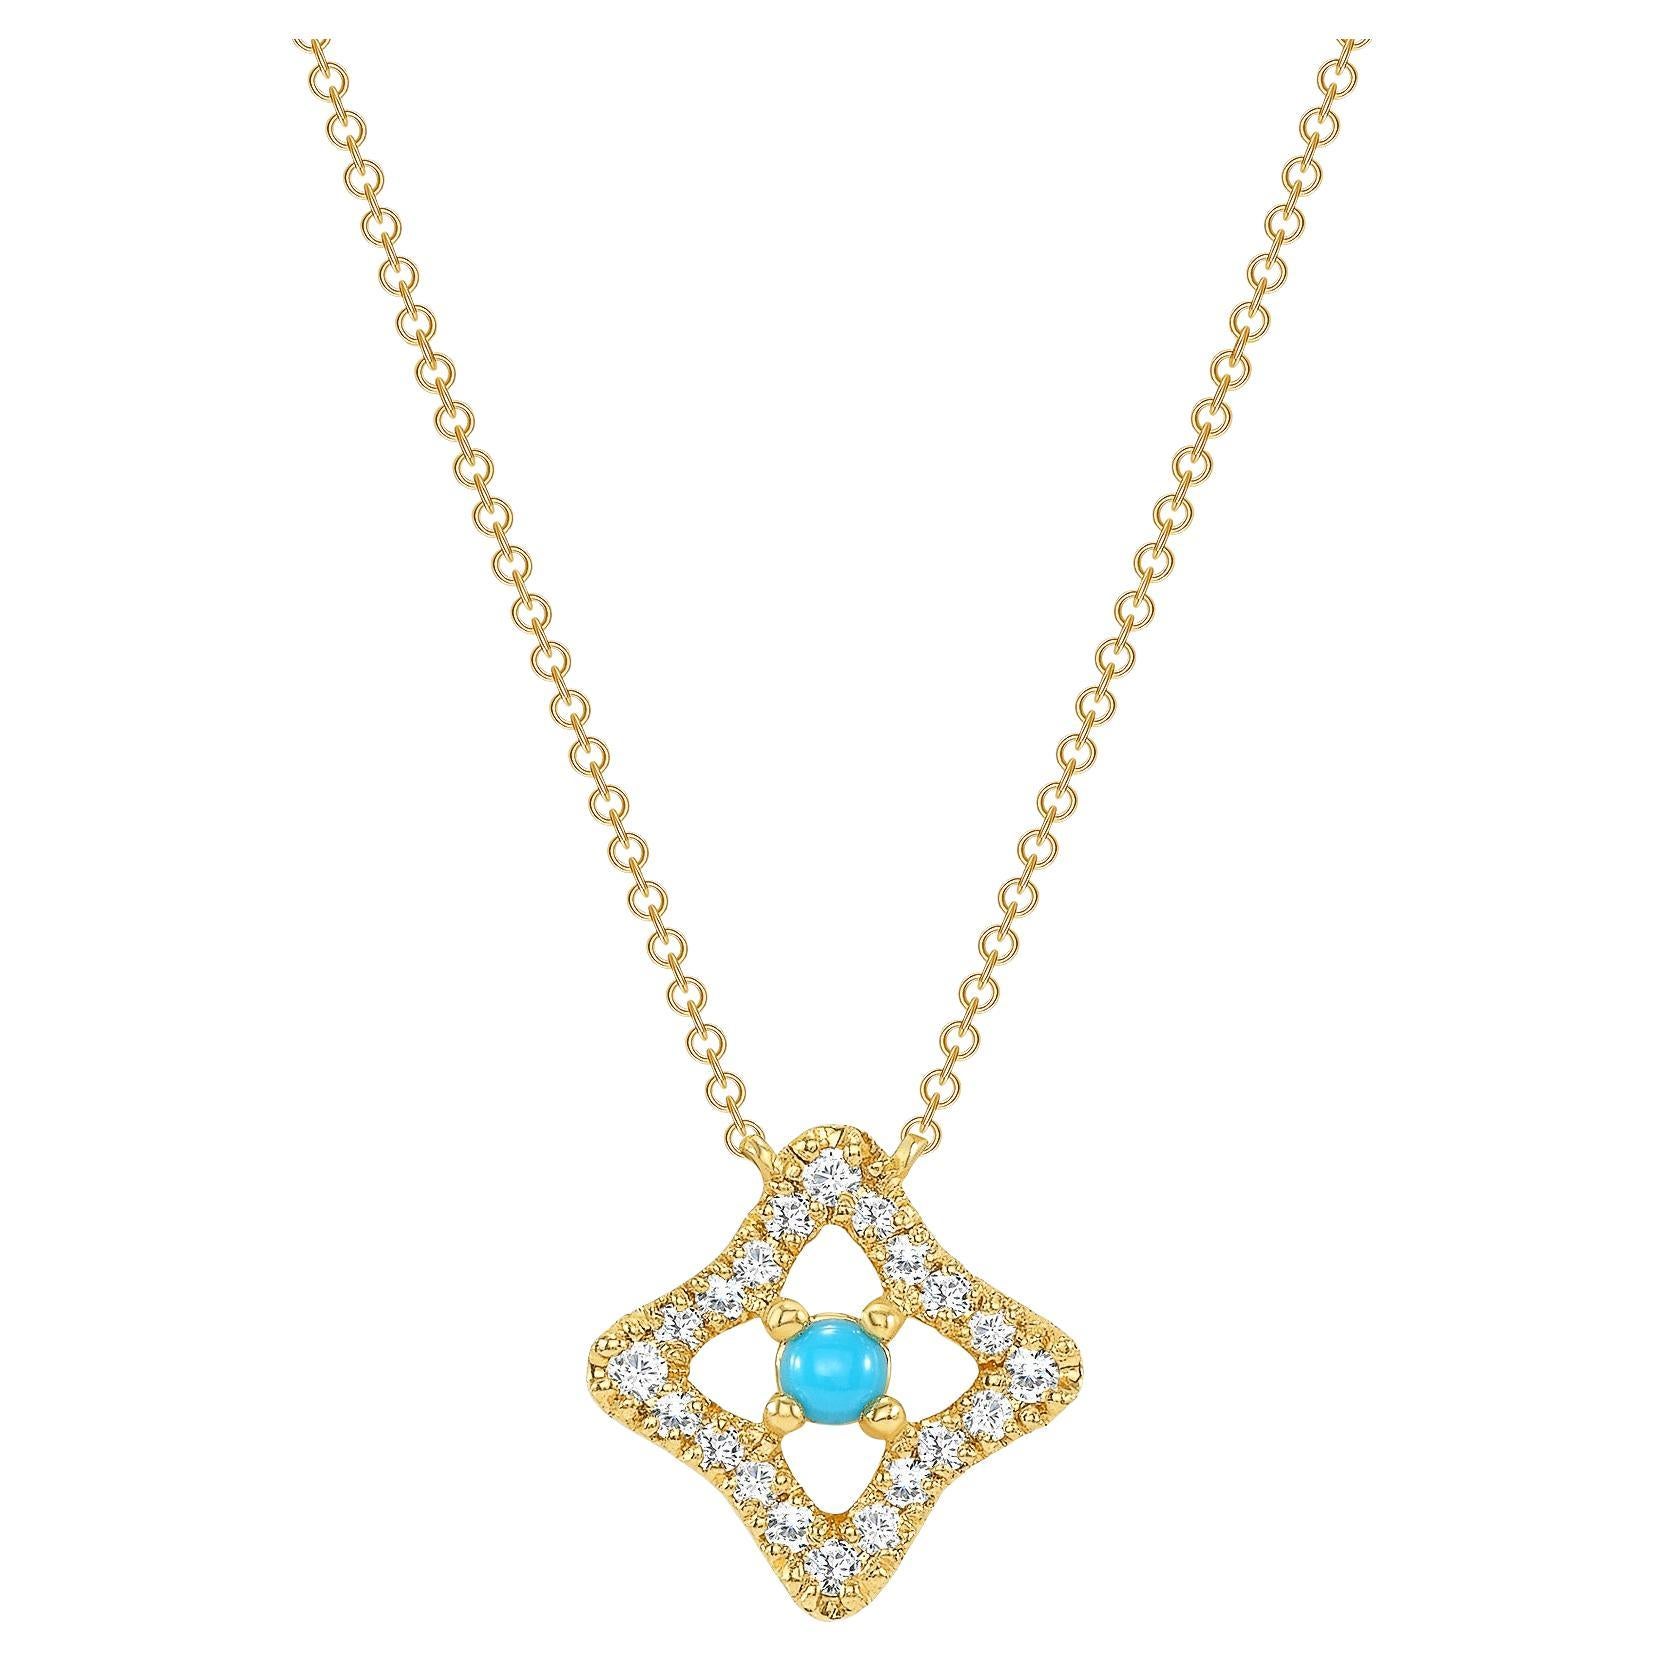 14K Yellow Gold Diamond & Turquoise Pendant Necklace